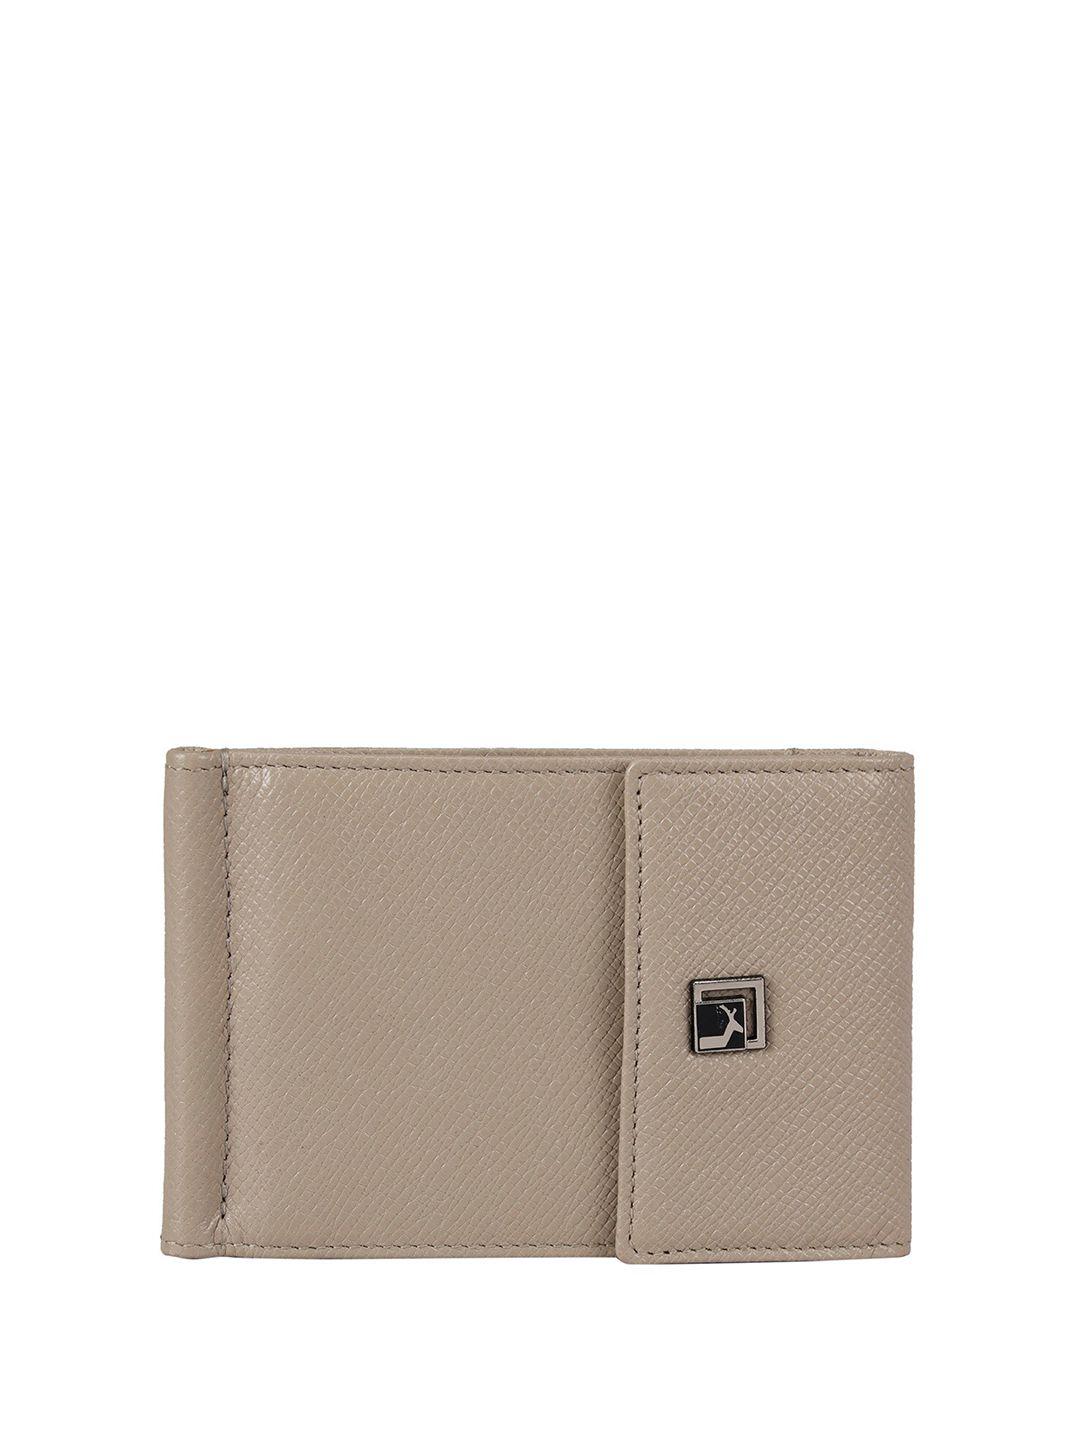 da milano unisex textured leather three fold wallet